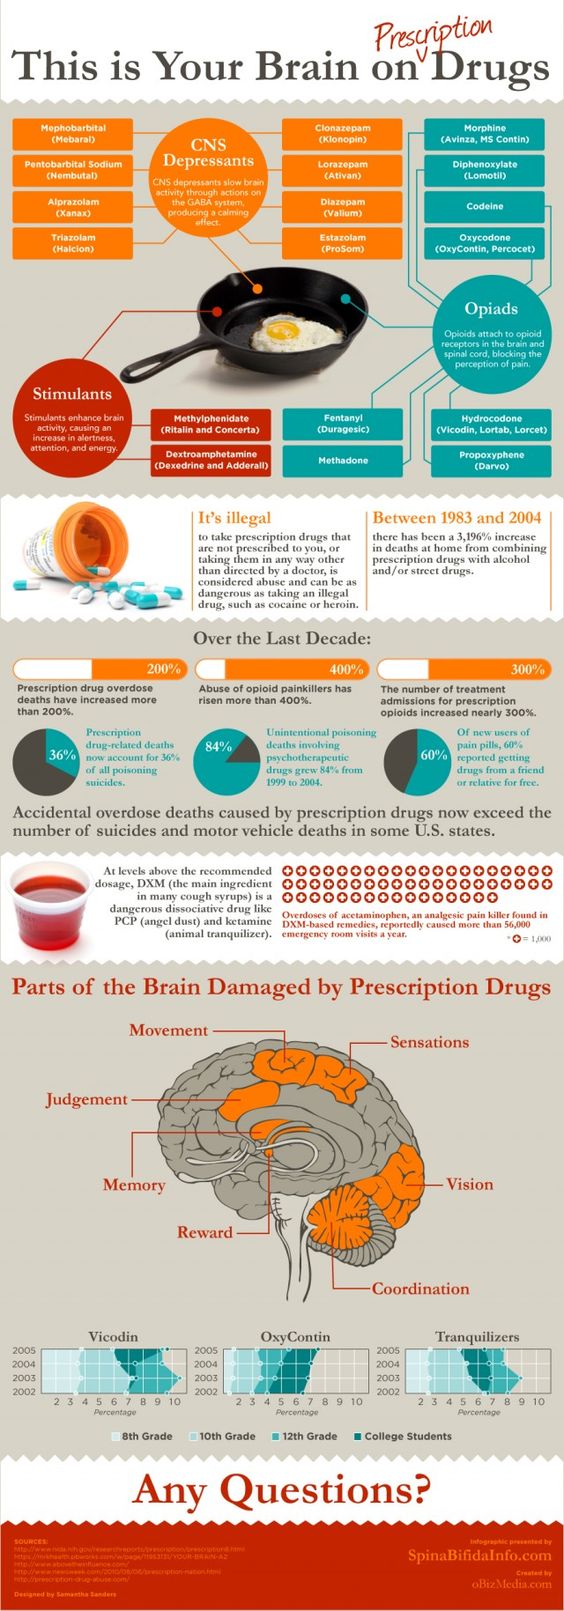 Prescription Drug Use